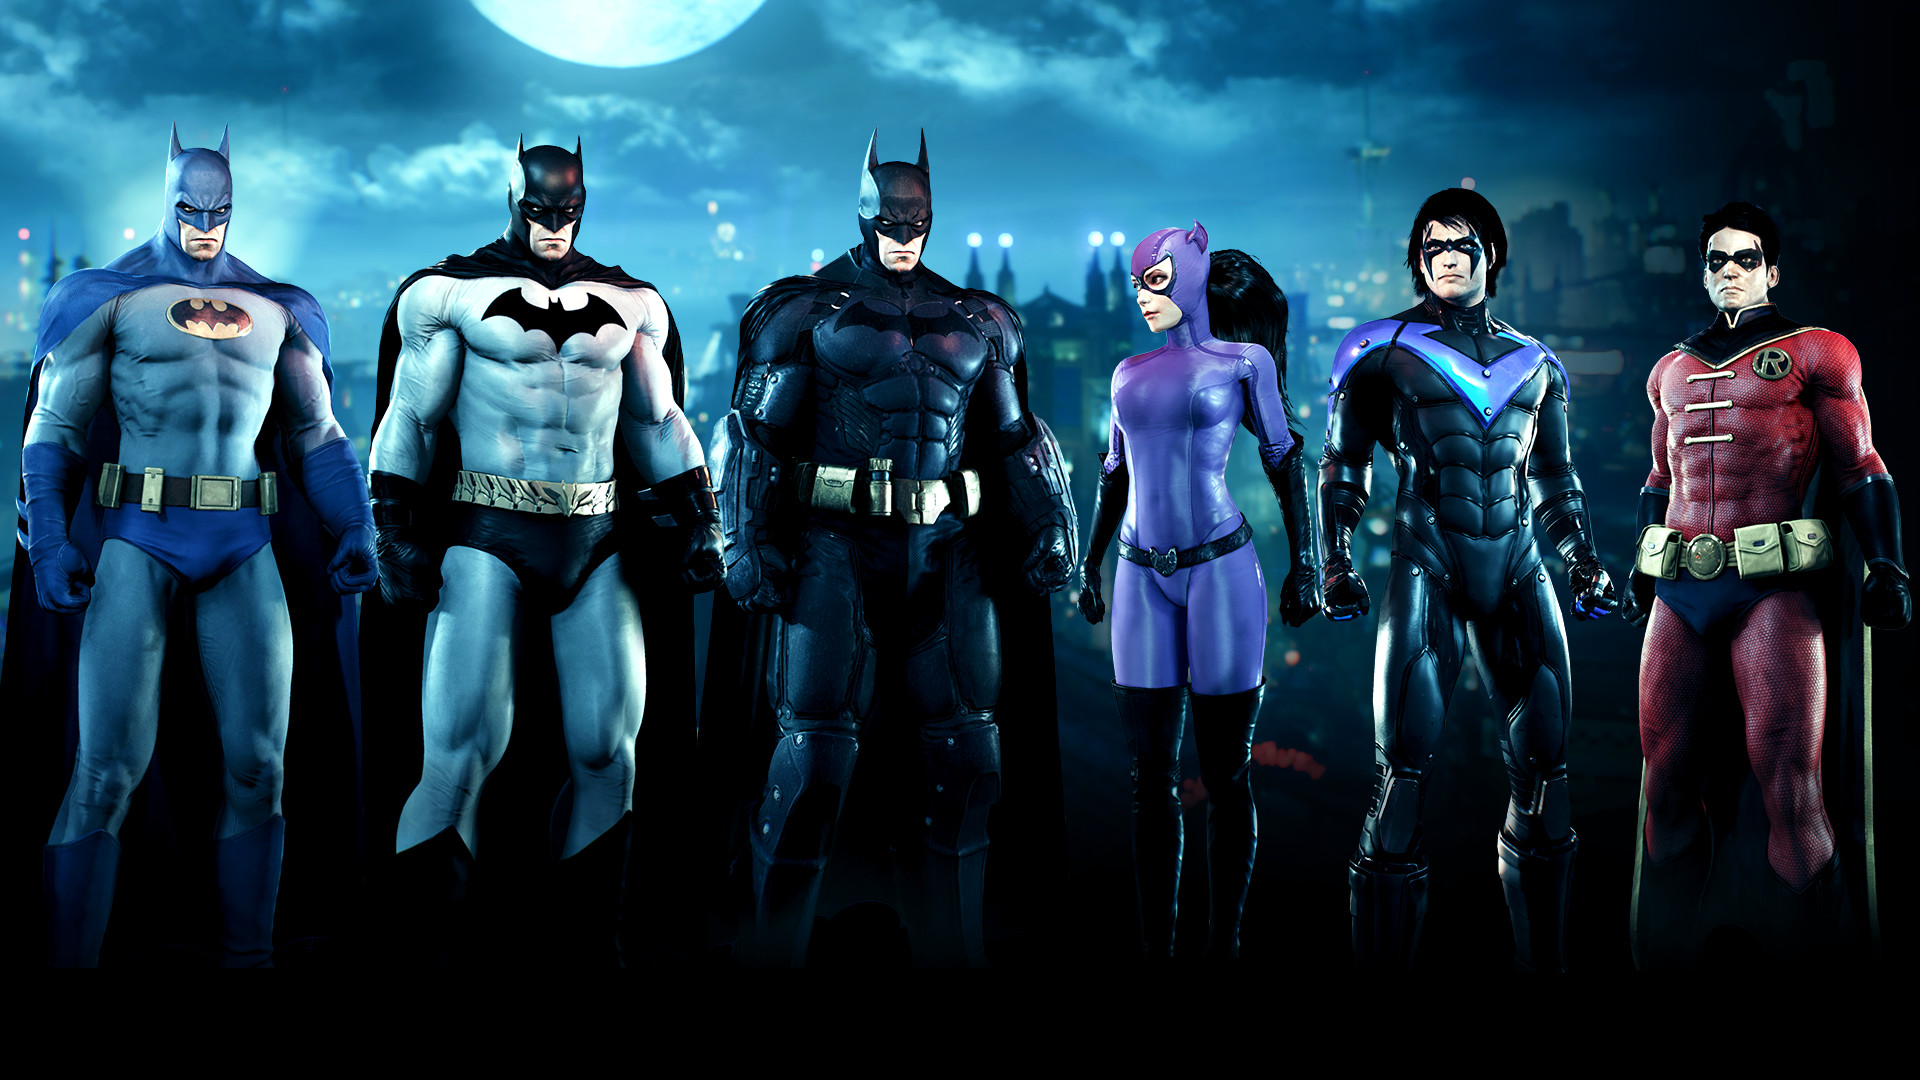 Batman™: Arkham Knight - Bat-Family Skin Pack trên Steam